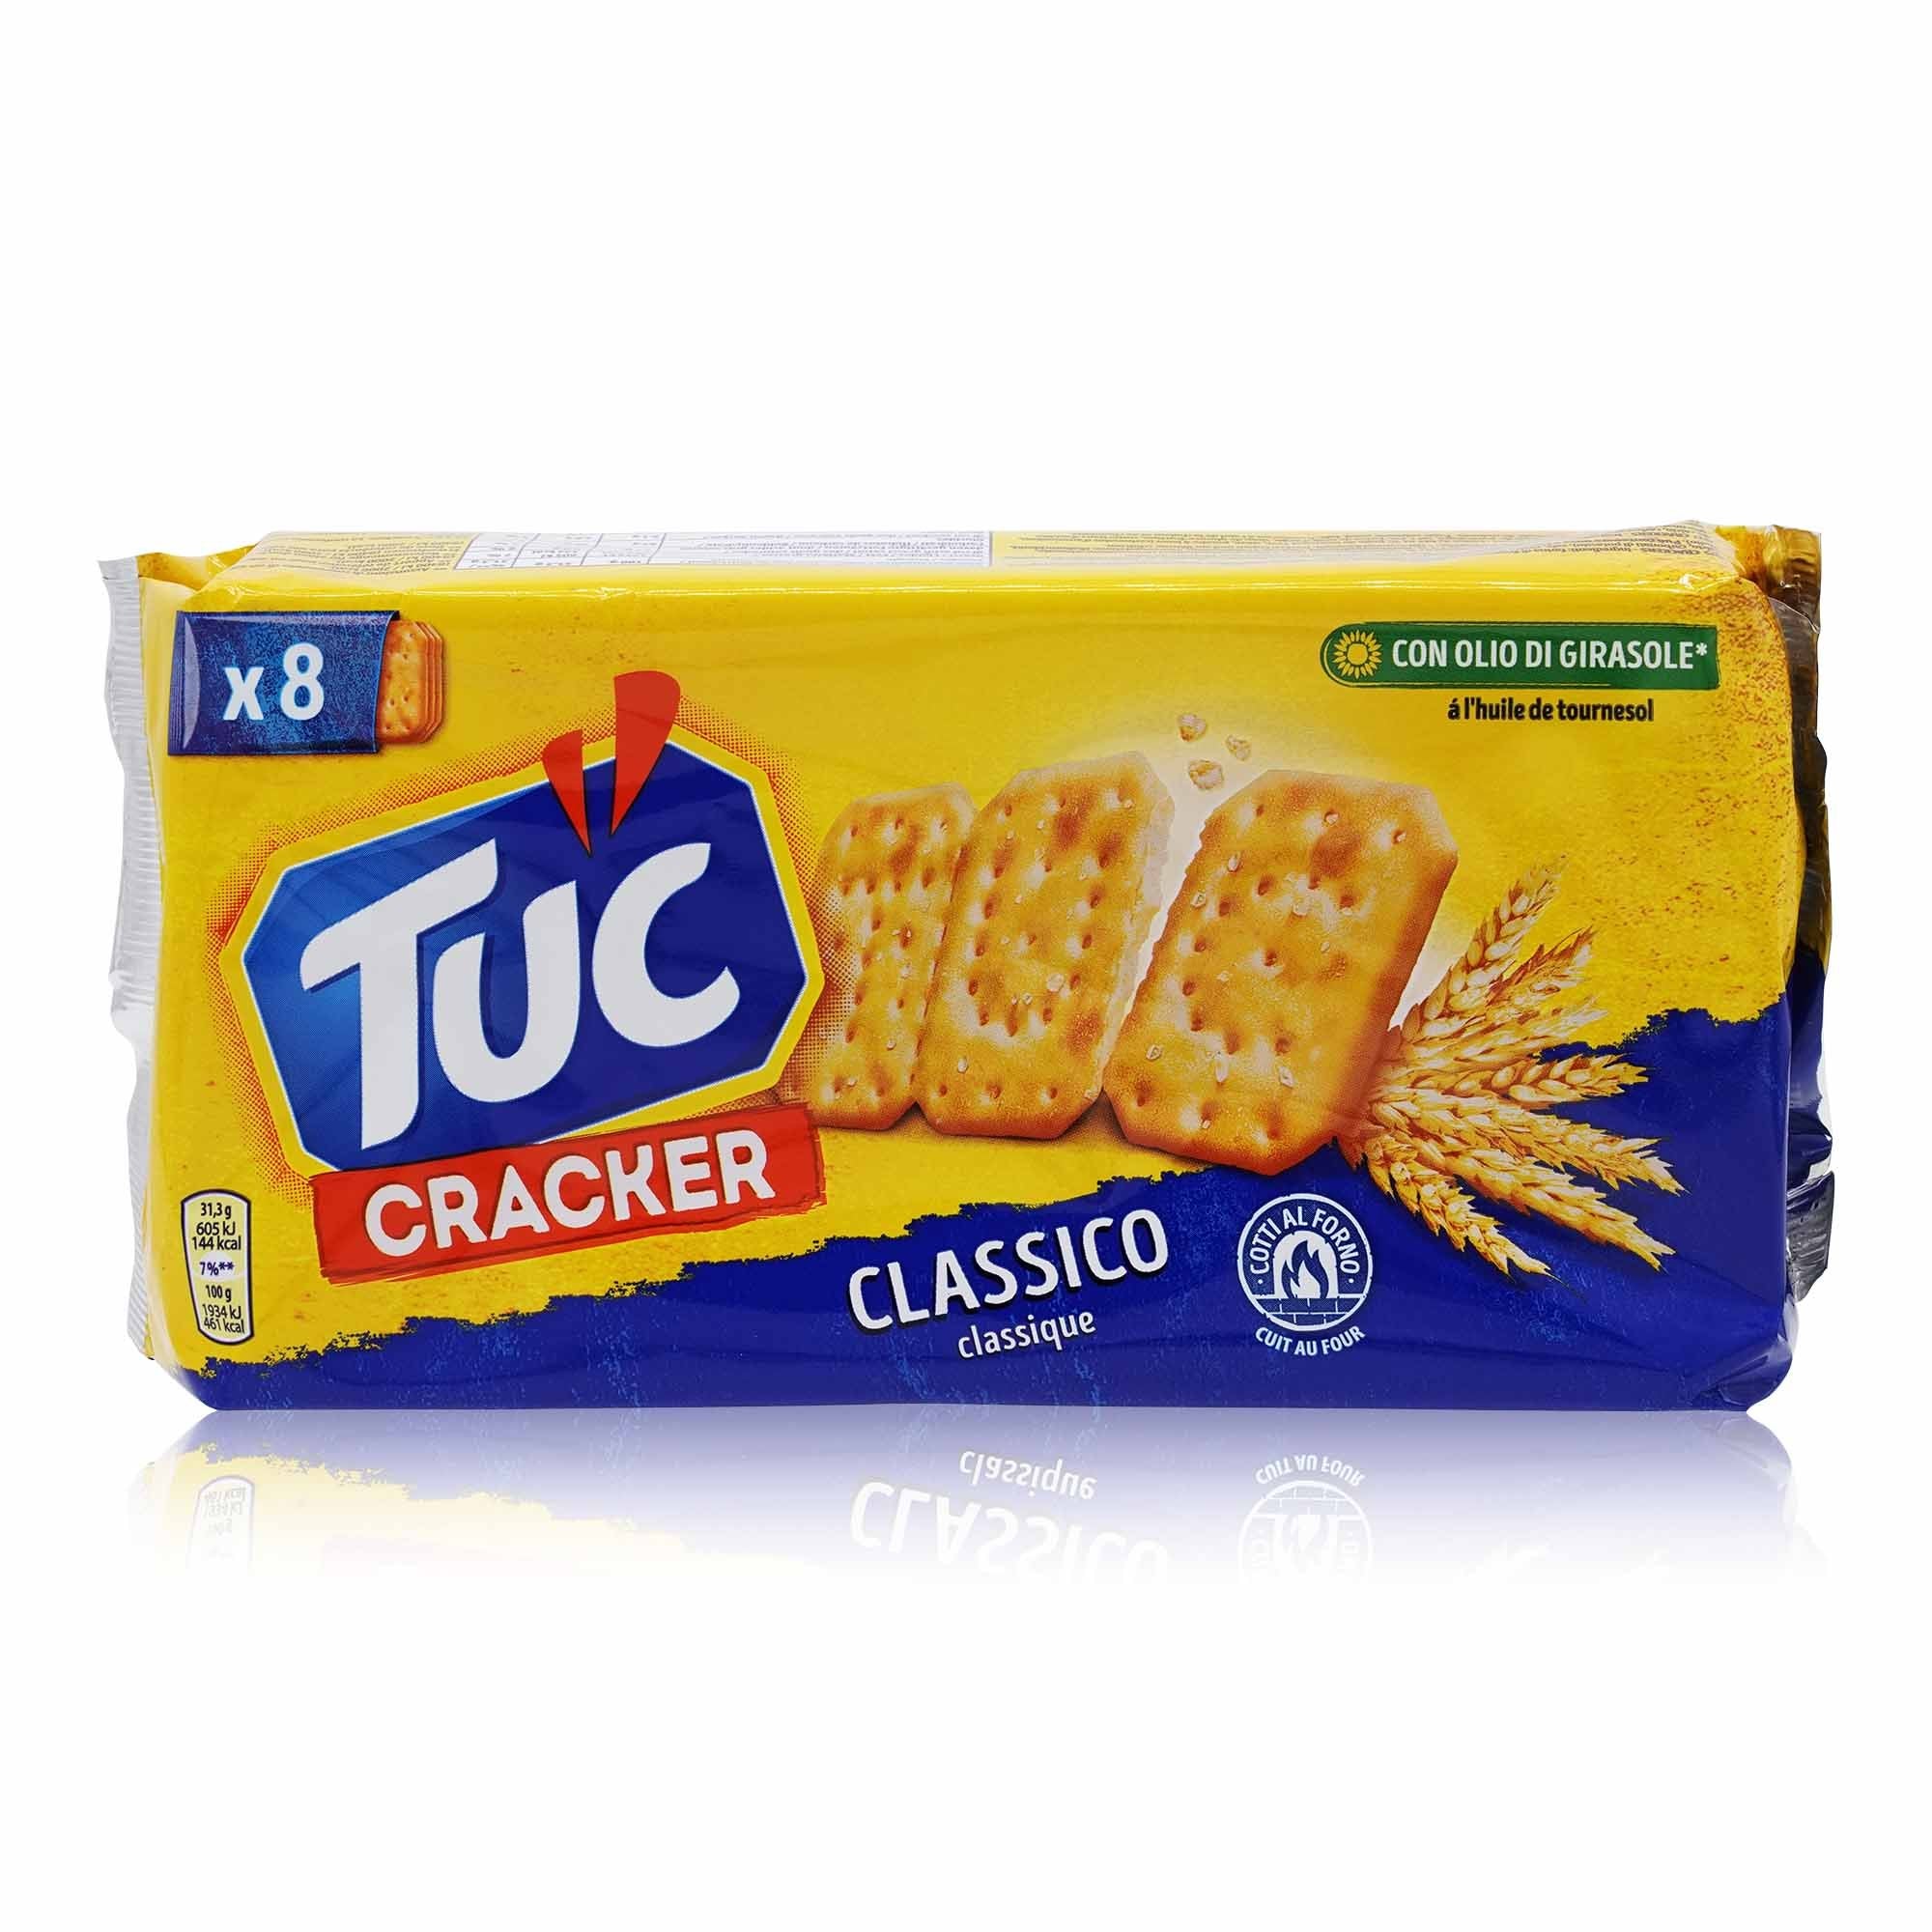 Cracker TUC classico – TUC Crackers klassisch - 0,250kg - italienisch-einkaufen.de